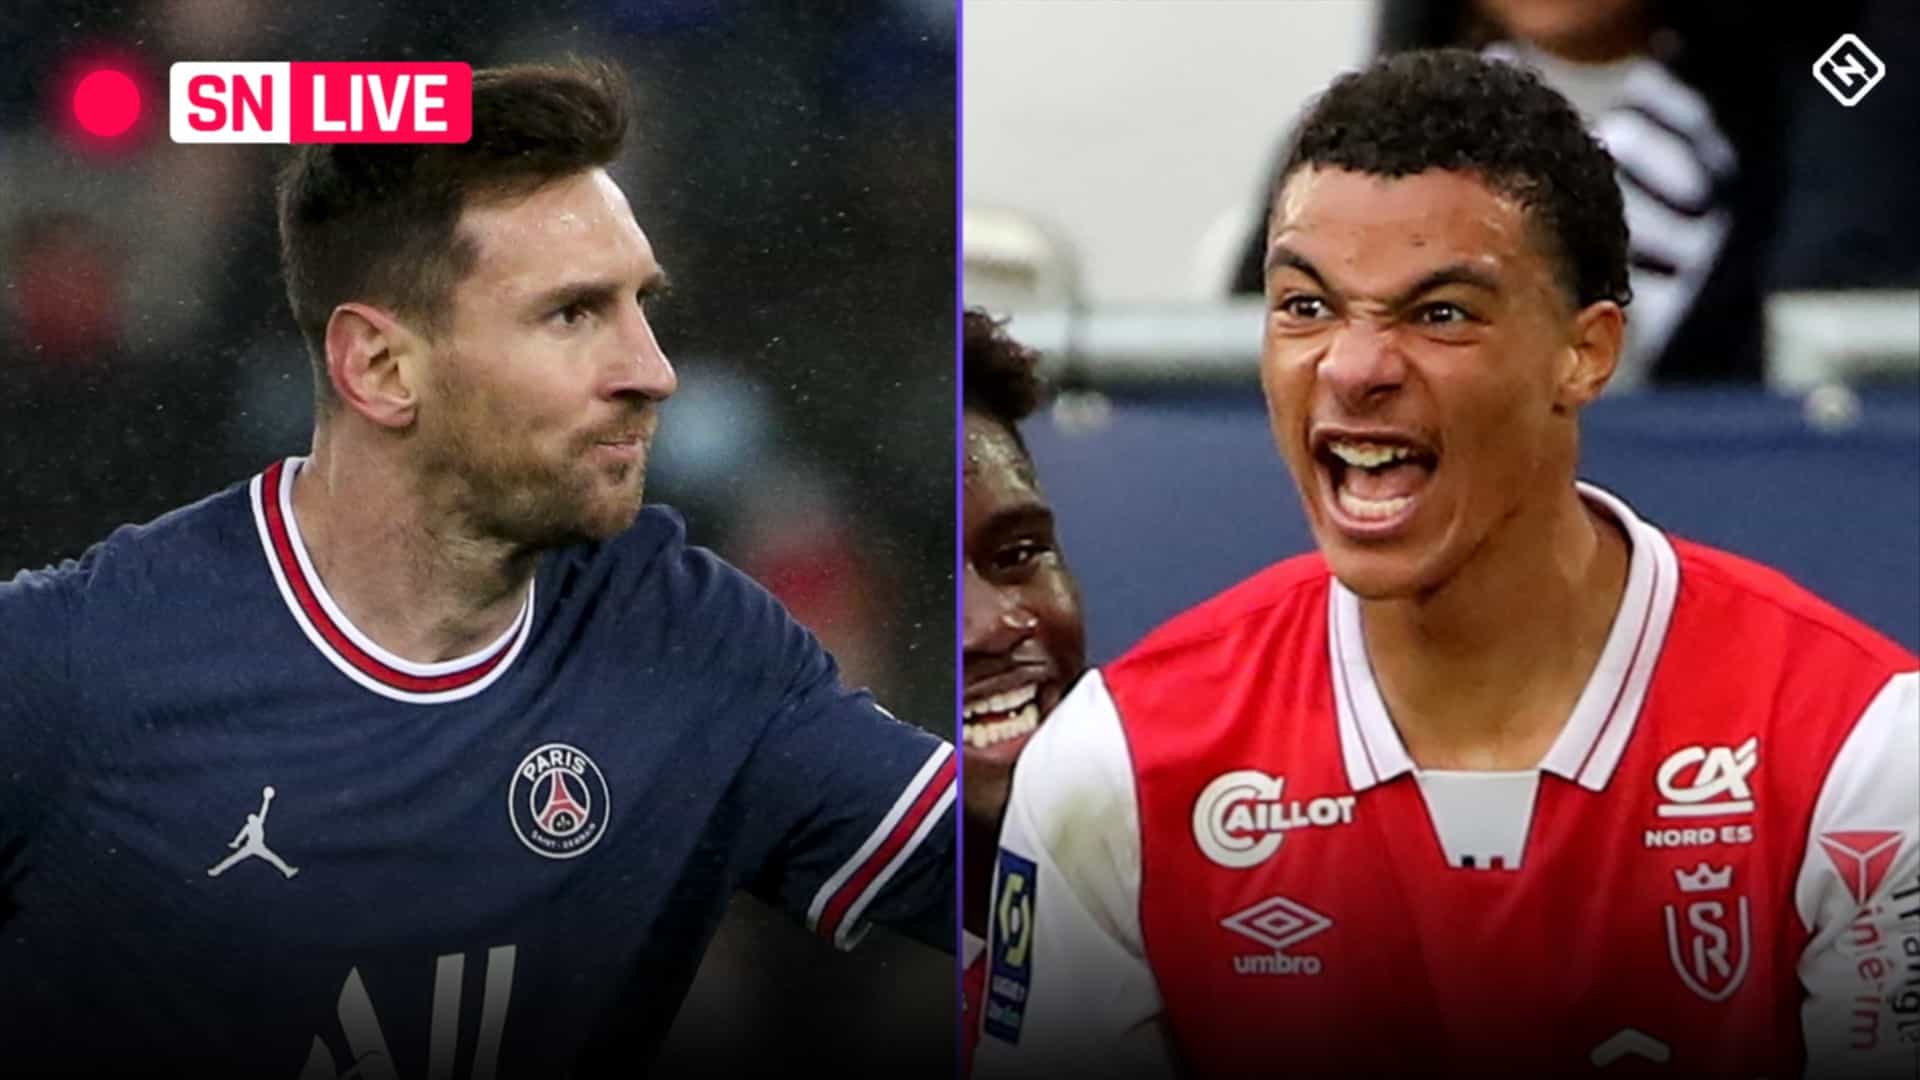 PSG vs. Stade de Reims live score, updates, highlights as Messi returns to Ligue 1